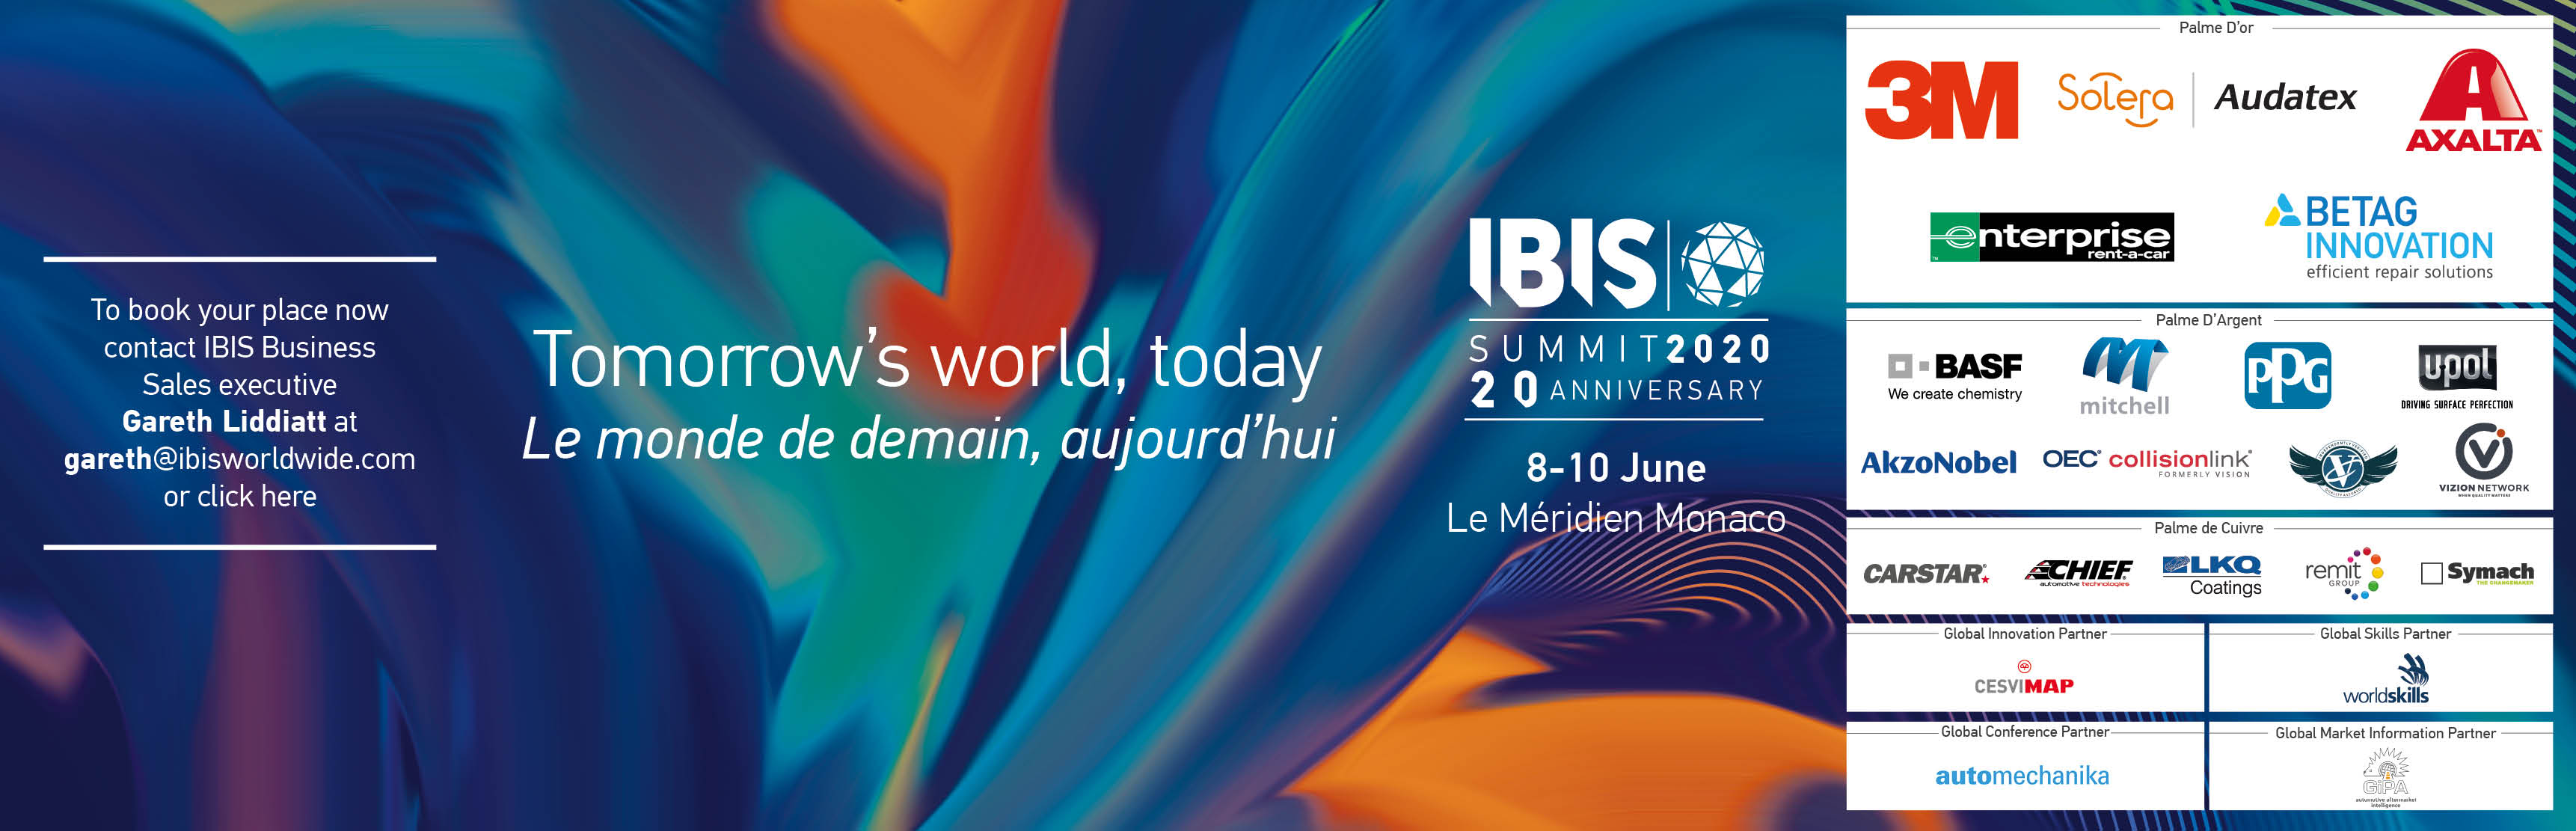 Ibis Homepage Banner 24 Jan 02 Ibis Worldwide